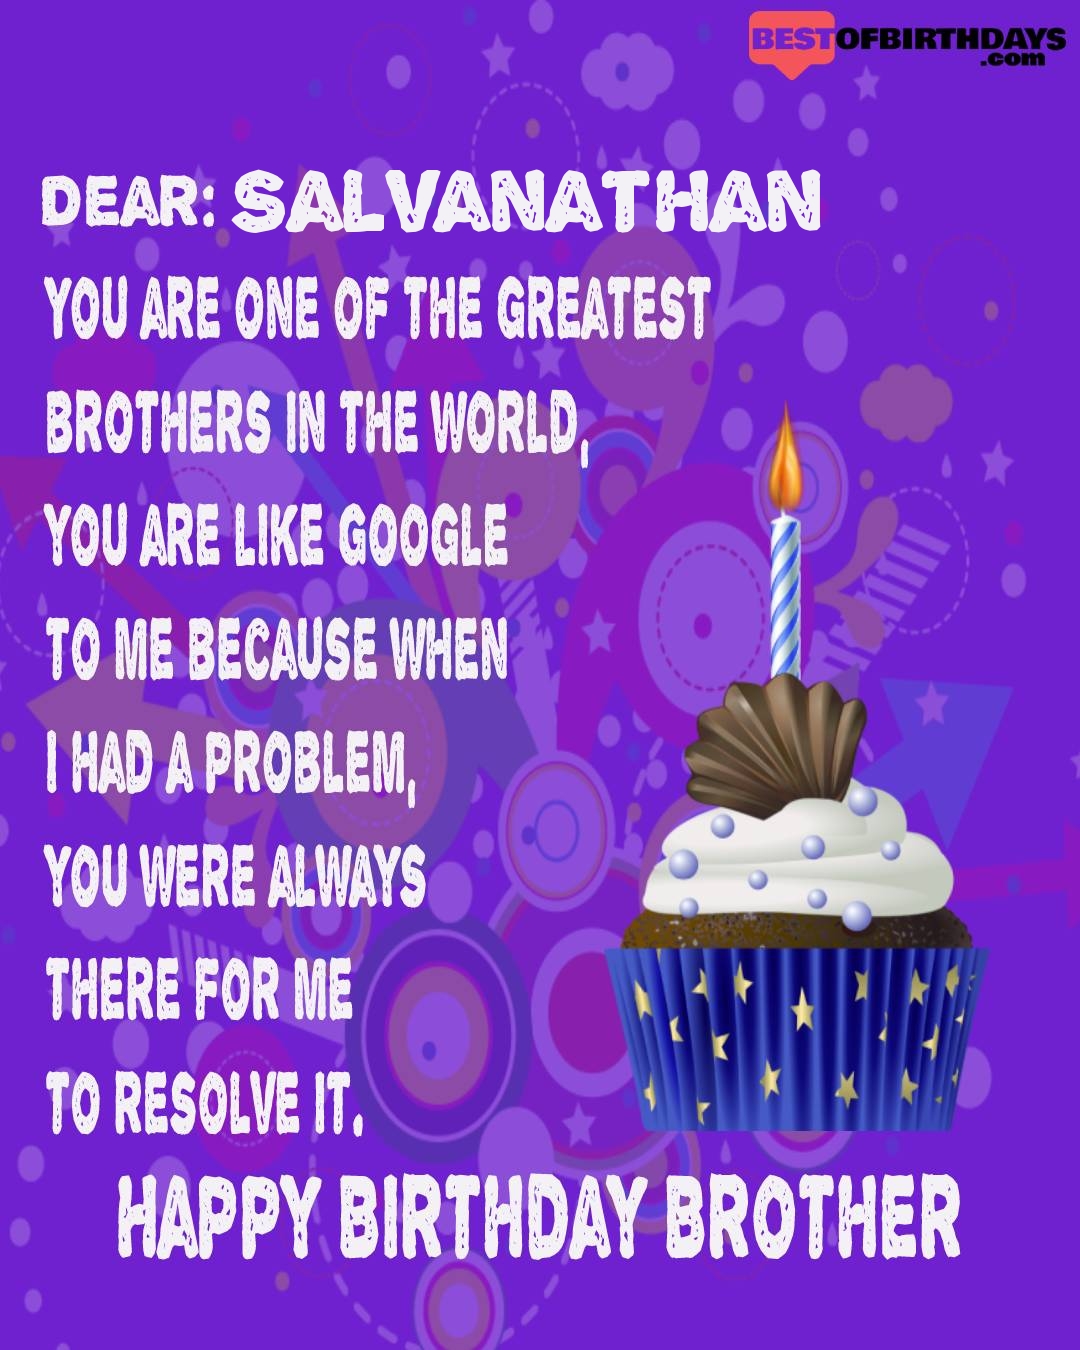 Happy birthday salvanathan bhai brother bro